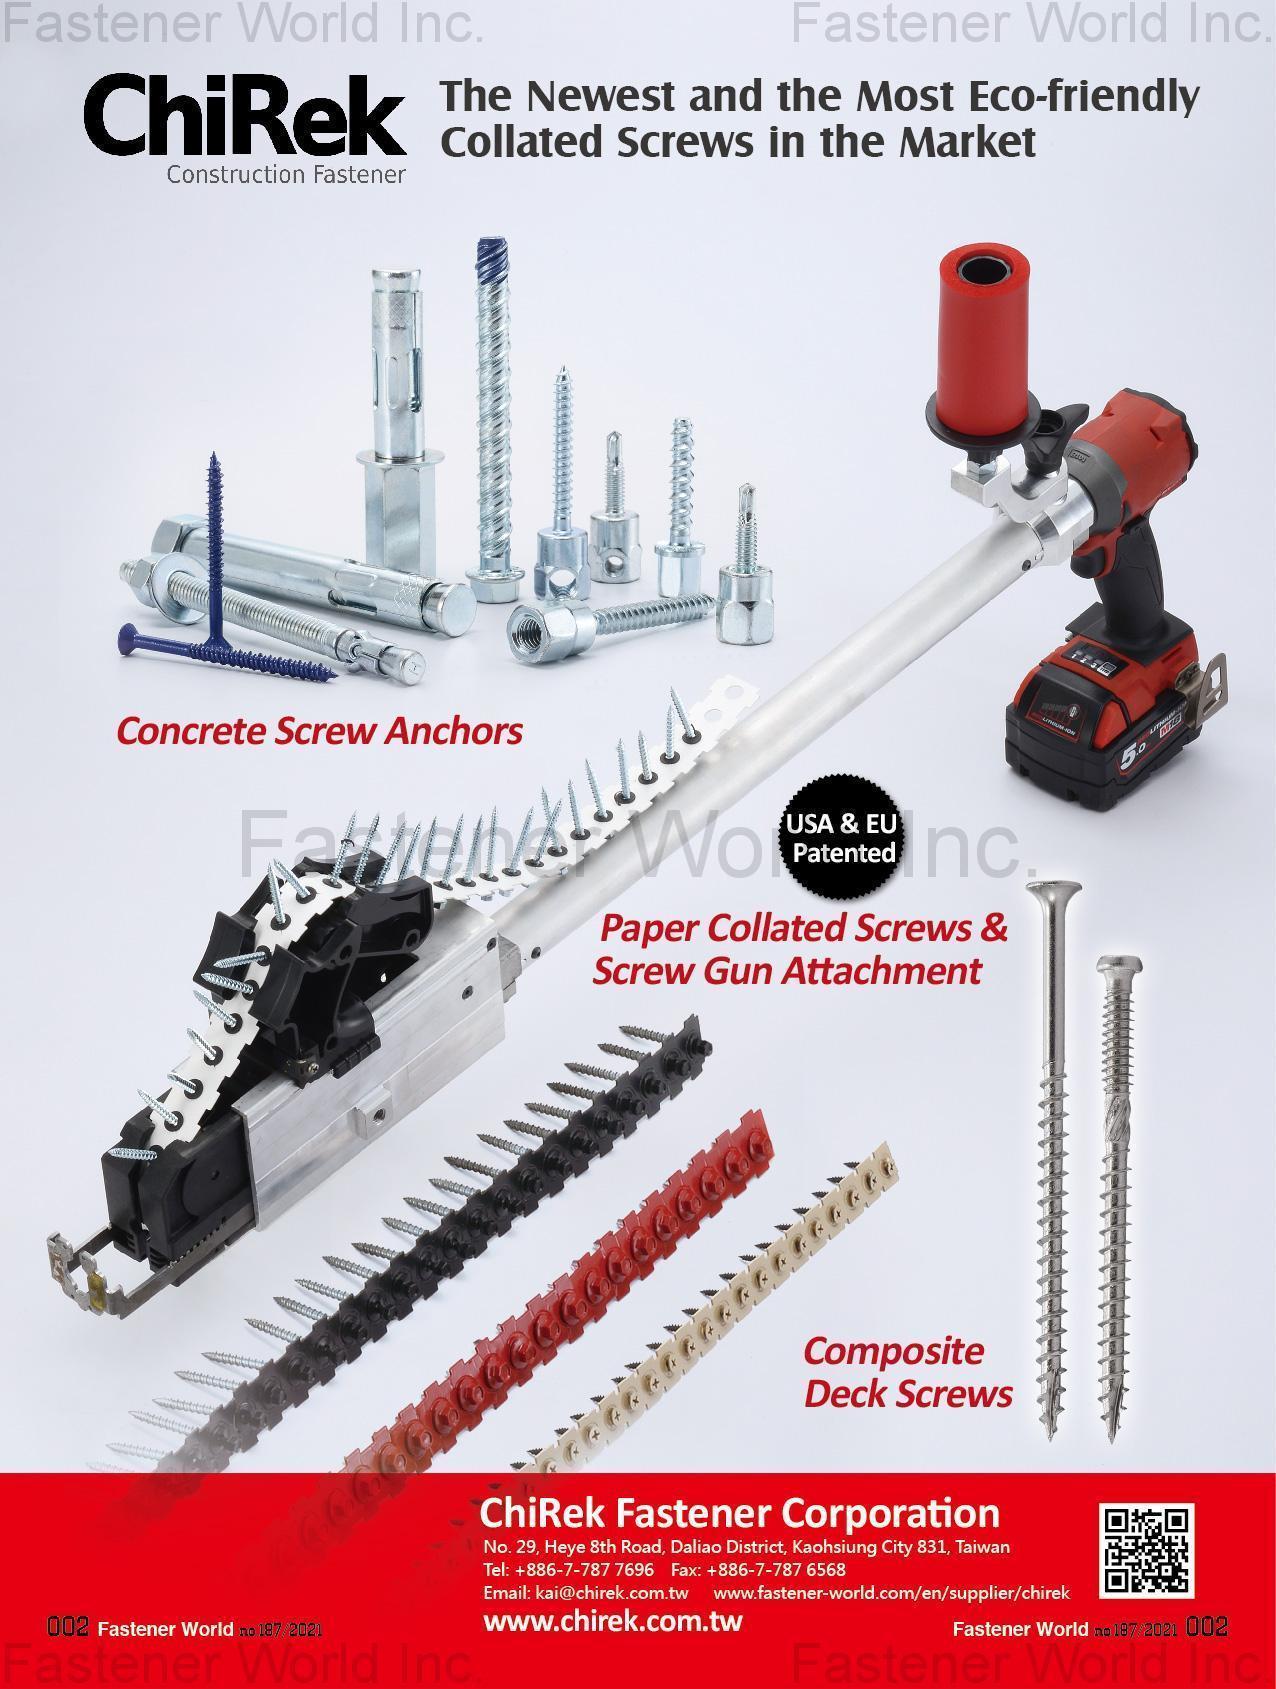 ChiRek Fastener Corporation , Concrete Screw Anchors, Paper Collated Screw & Screw Gun Attachment, Composite Deck Screws